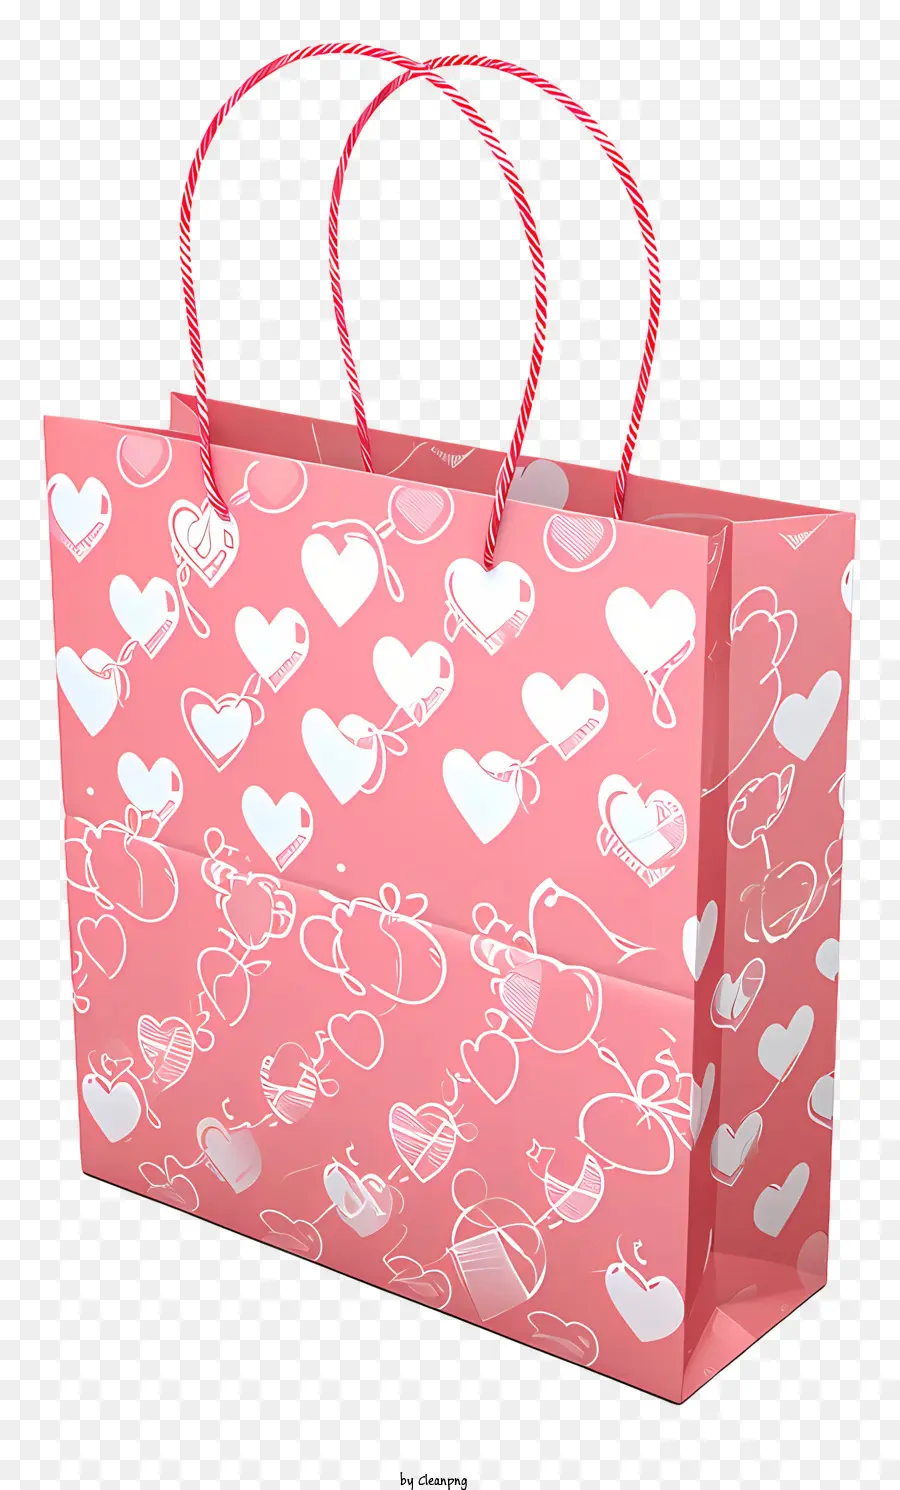 Сумка подарочного пакета Валентина，розовый хозяйственная сумка PNG